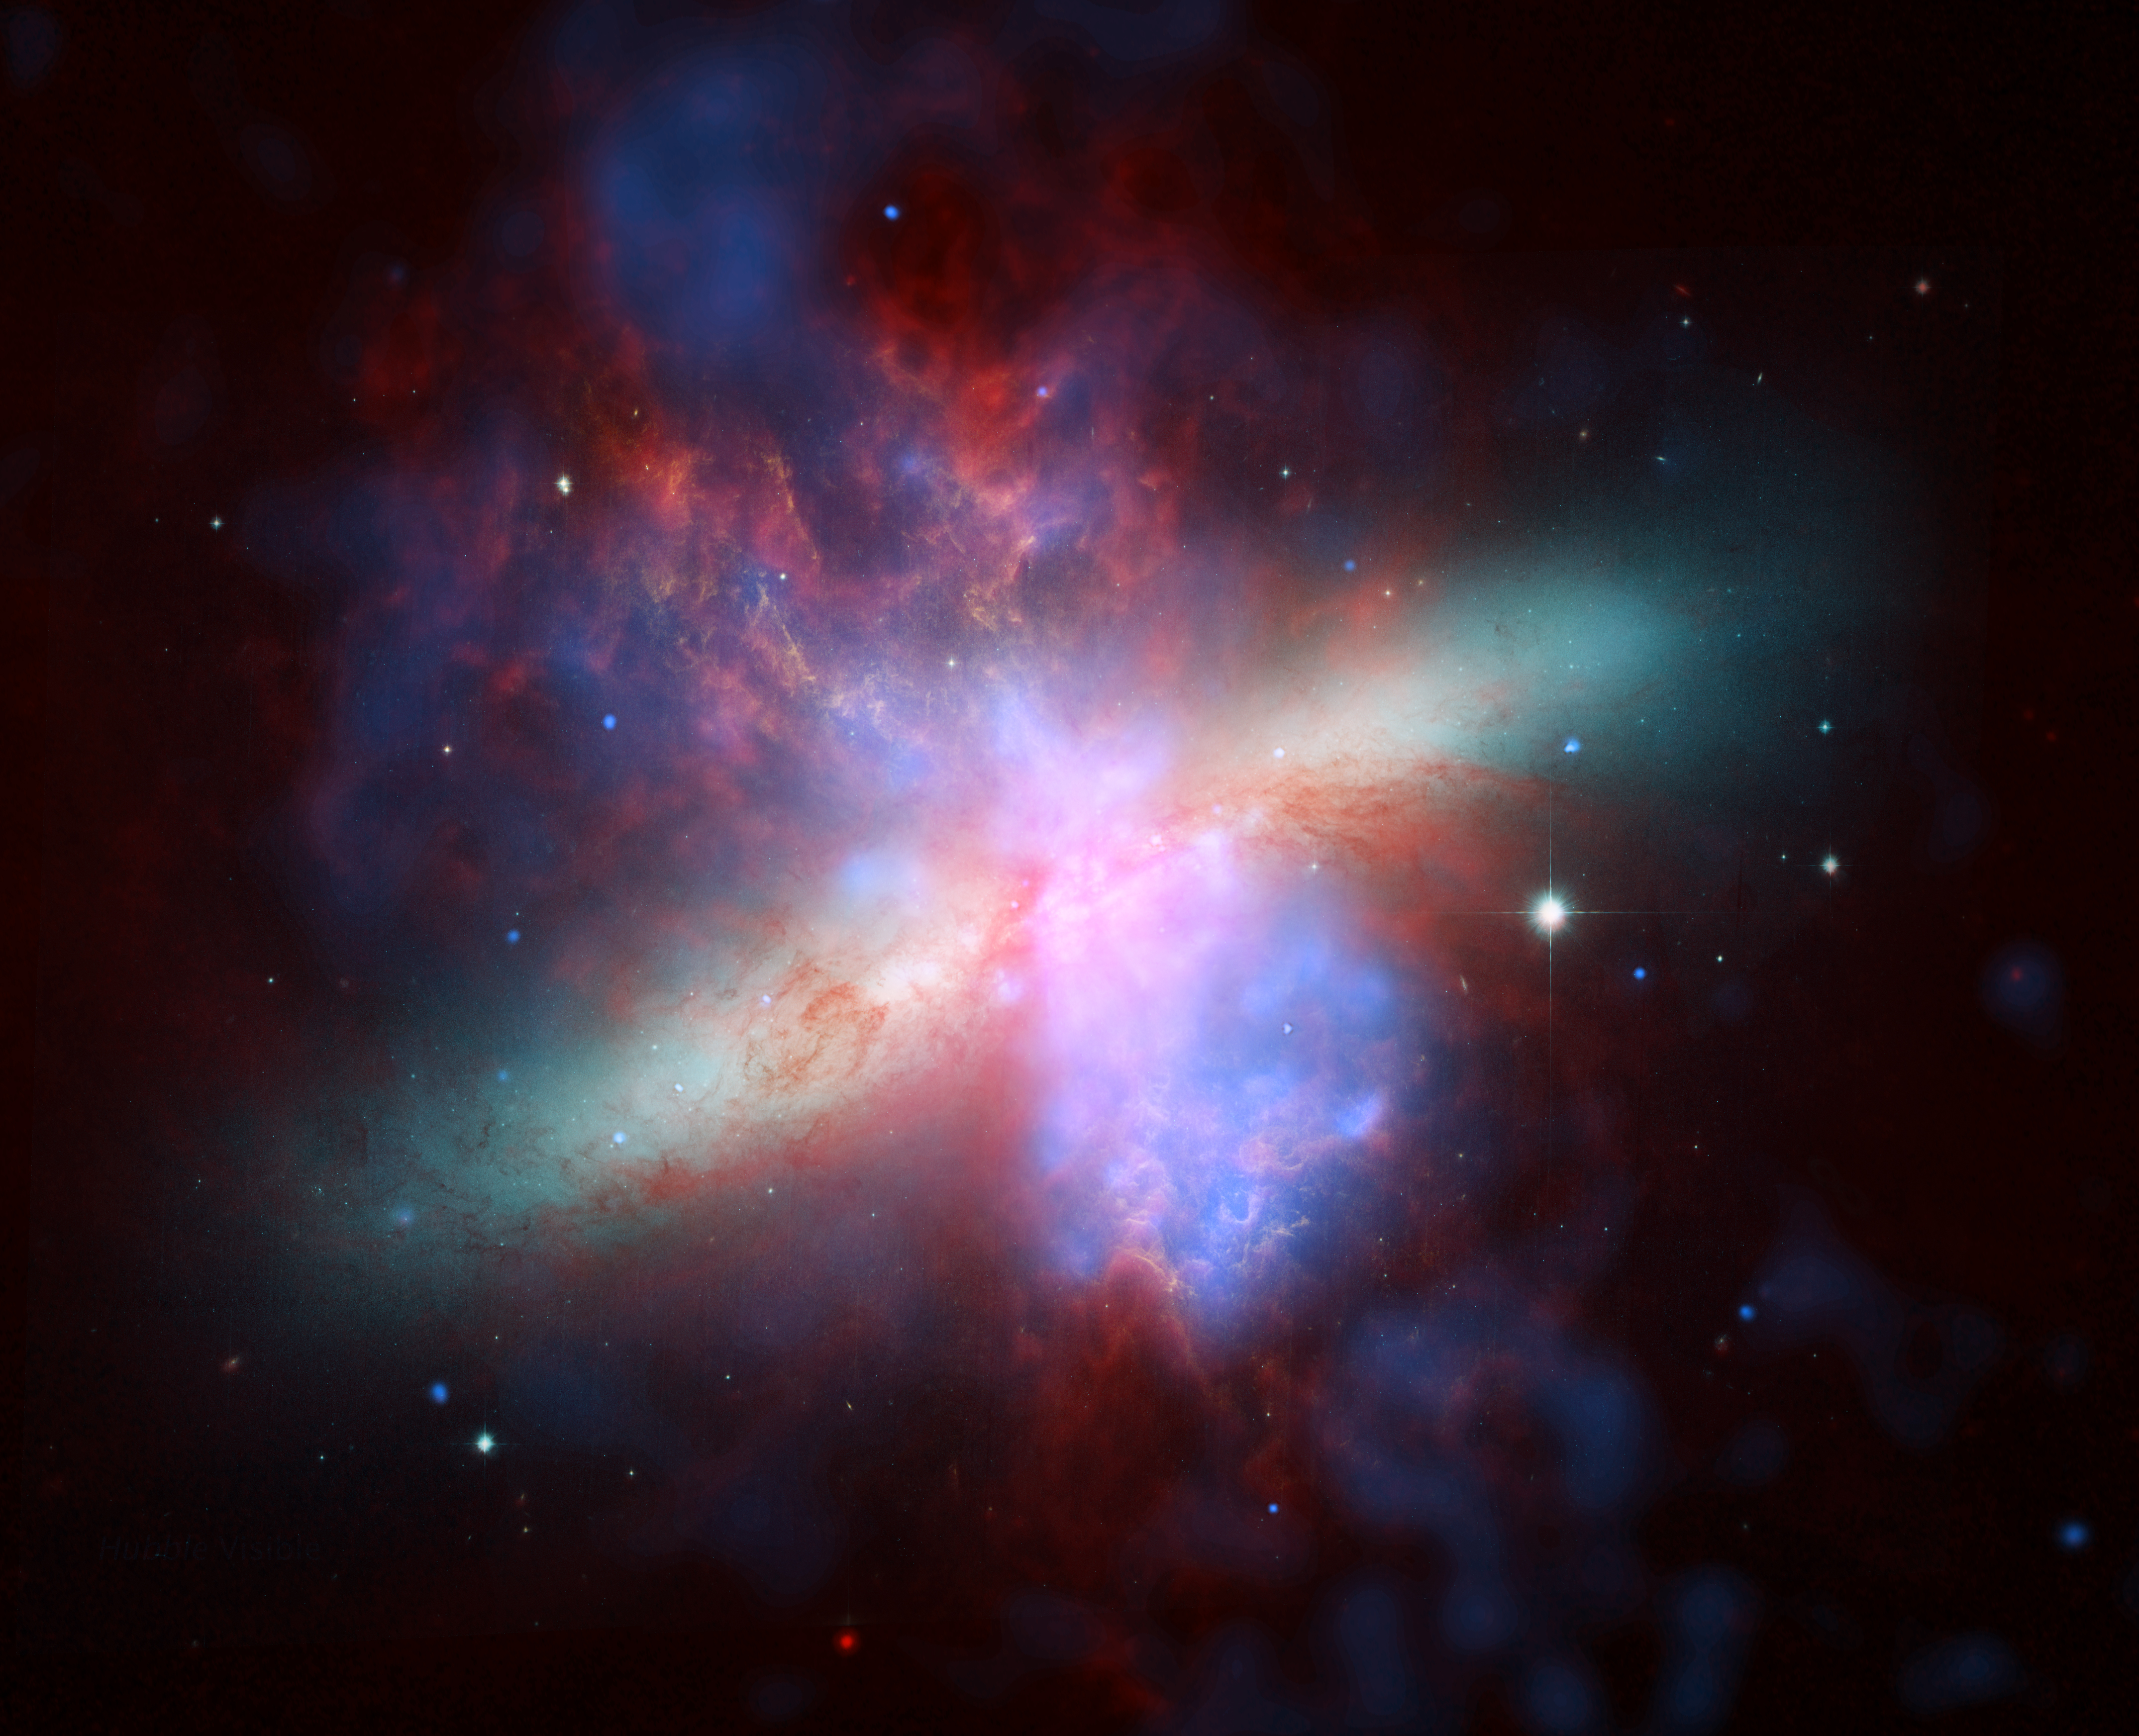 <span style="font-size:16px;position:relative;top:-60px">[NASA/JPL-Caltech/STScI/CXC/UofA/ESA/AURA/JHU](http://www.spitzer.caltech.edu/images/2205-sig06-010-M82-Great-Observatories-Present-Rainbow-of-a-Galaxy)</span>